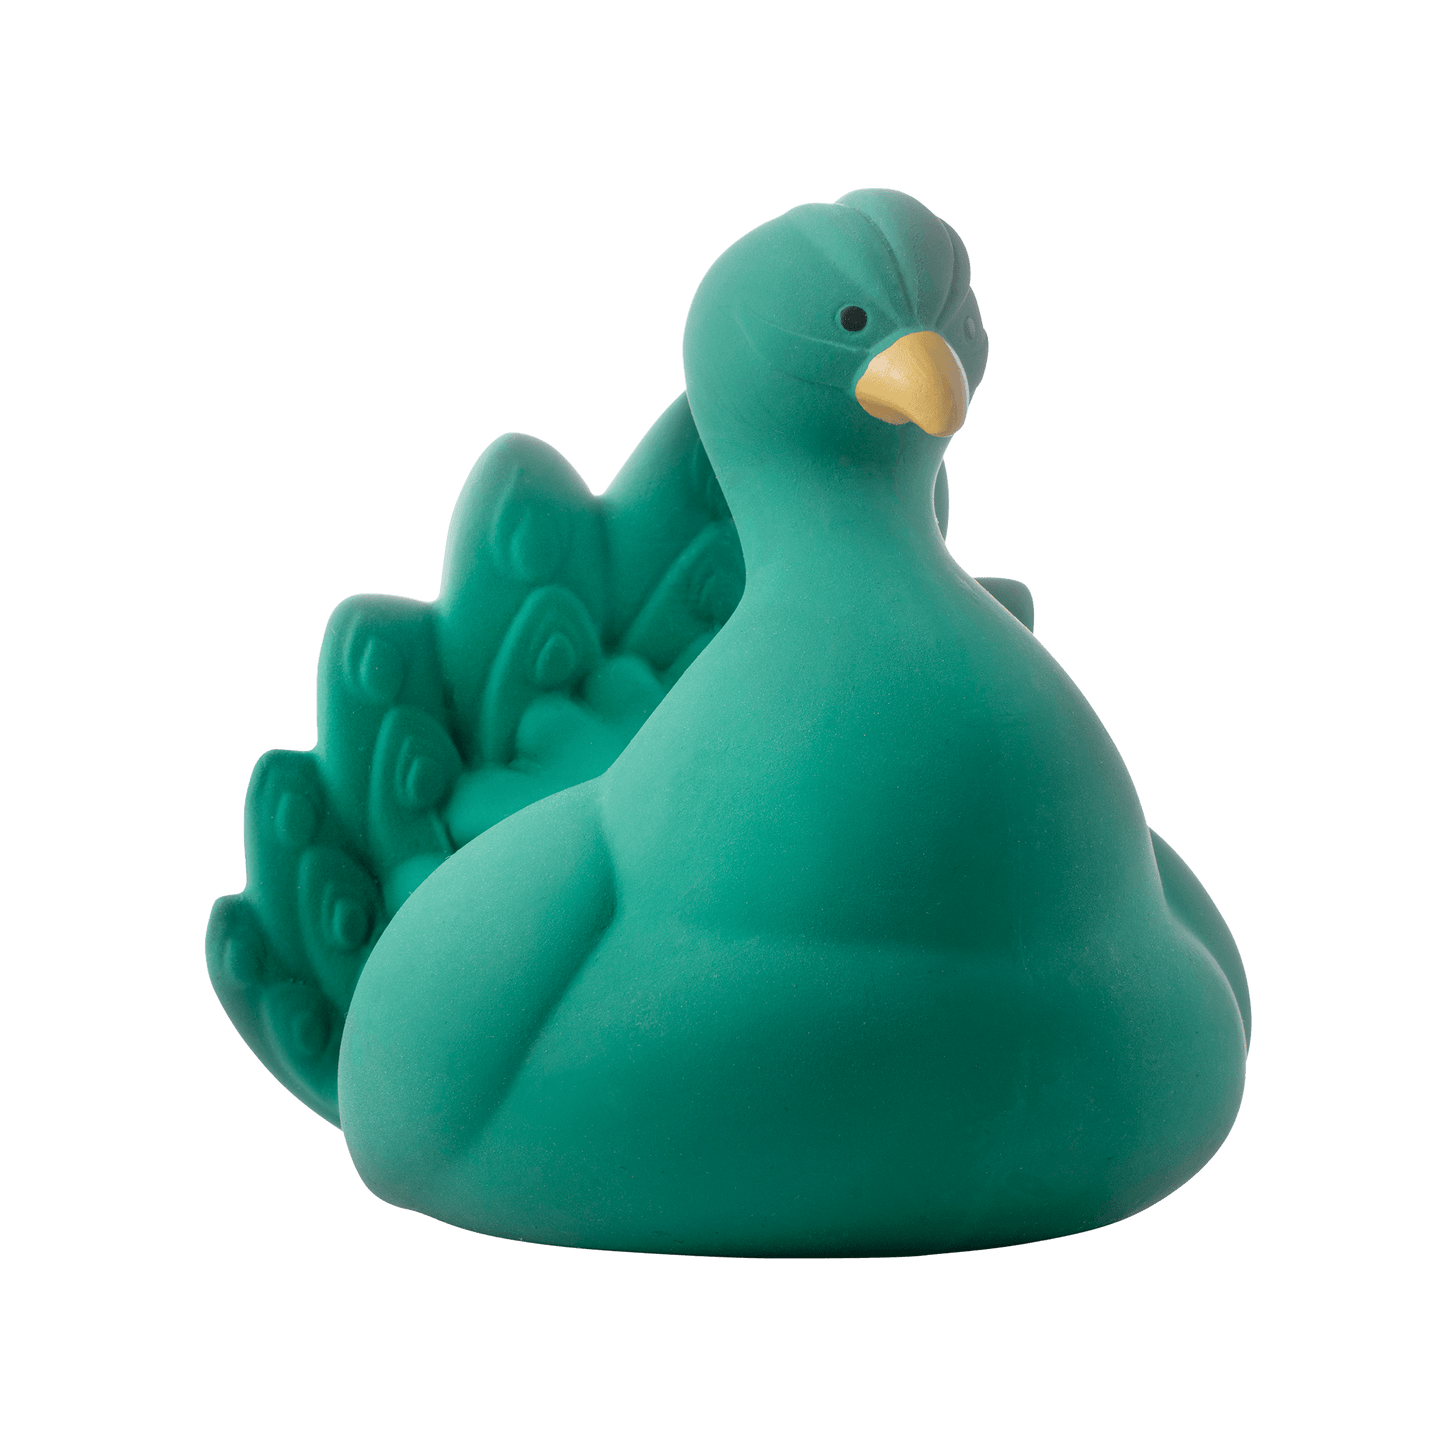 Green bath peacock